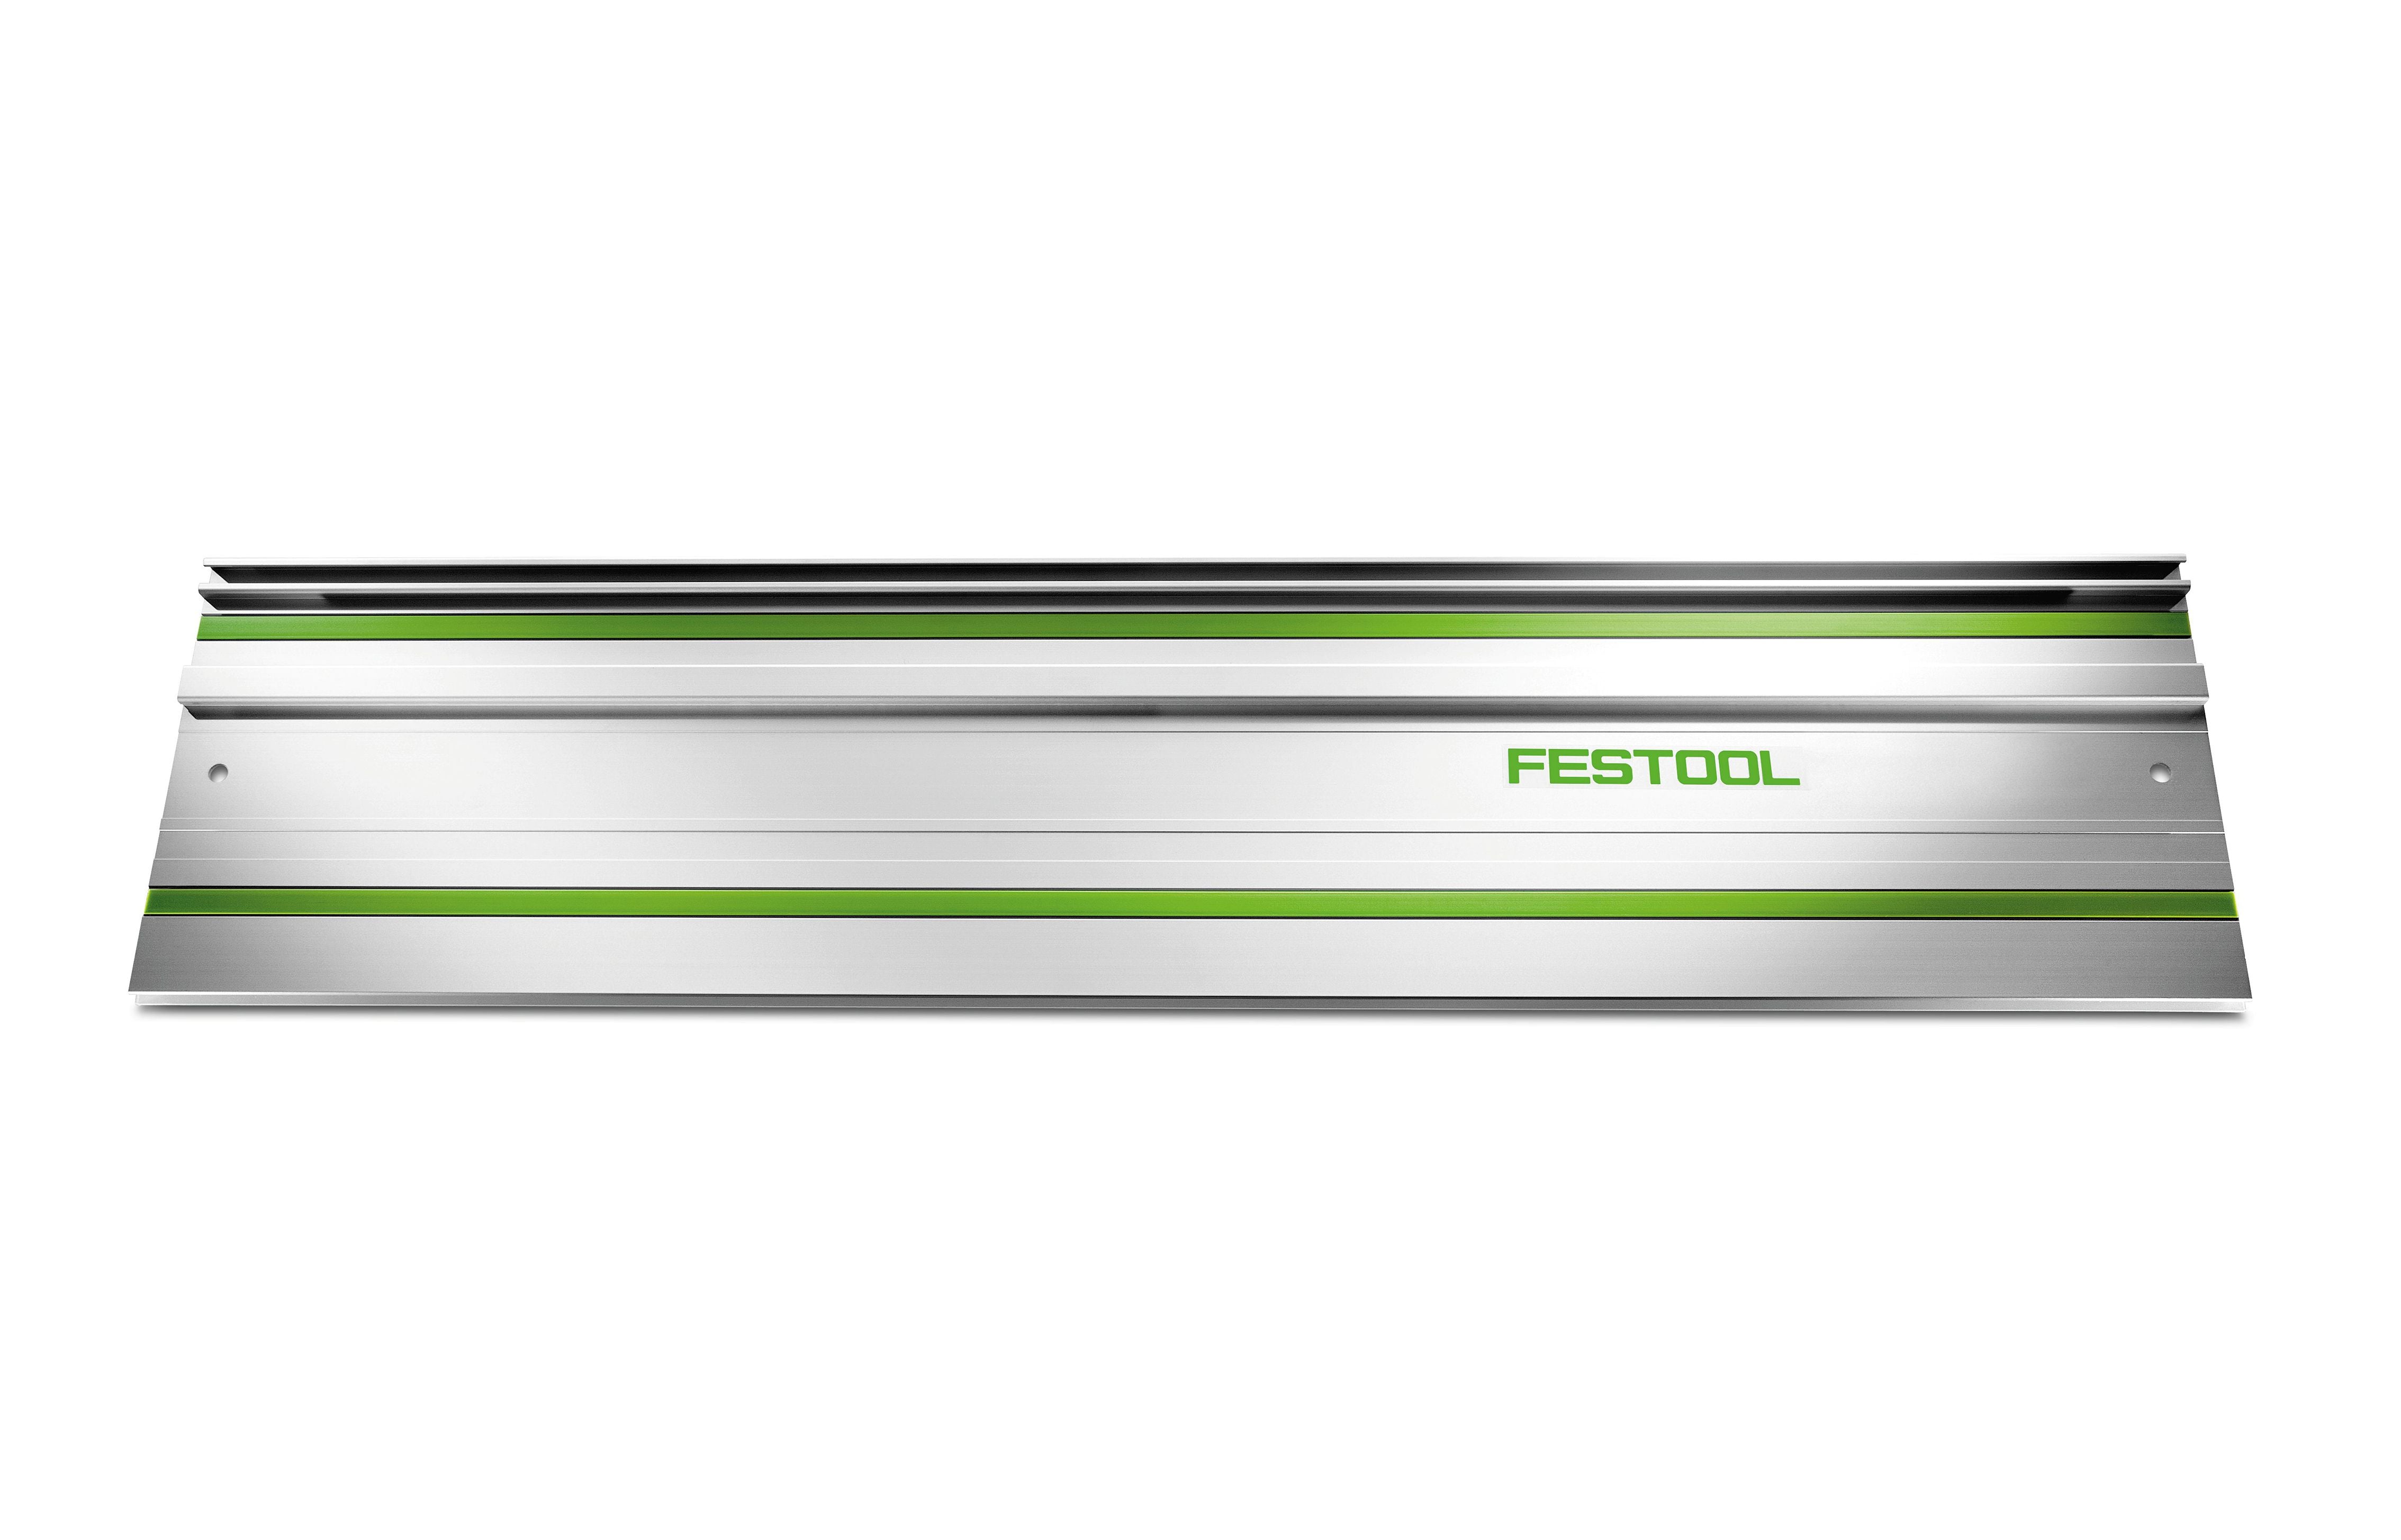 Guide Rail 1400mm, FS 1400/2 - 491498 by Festool